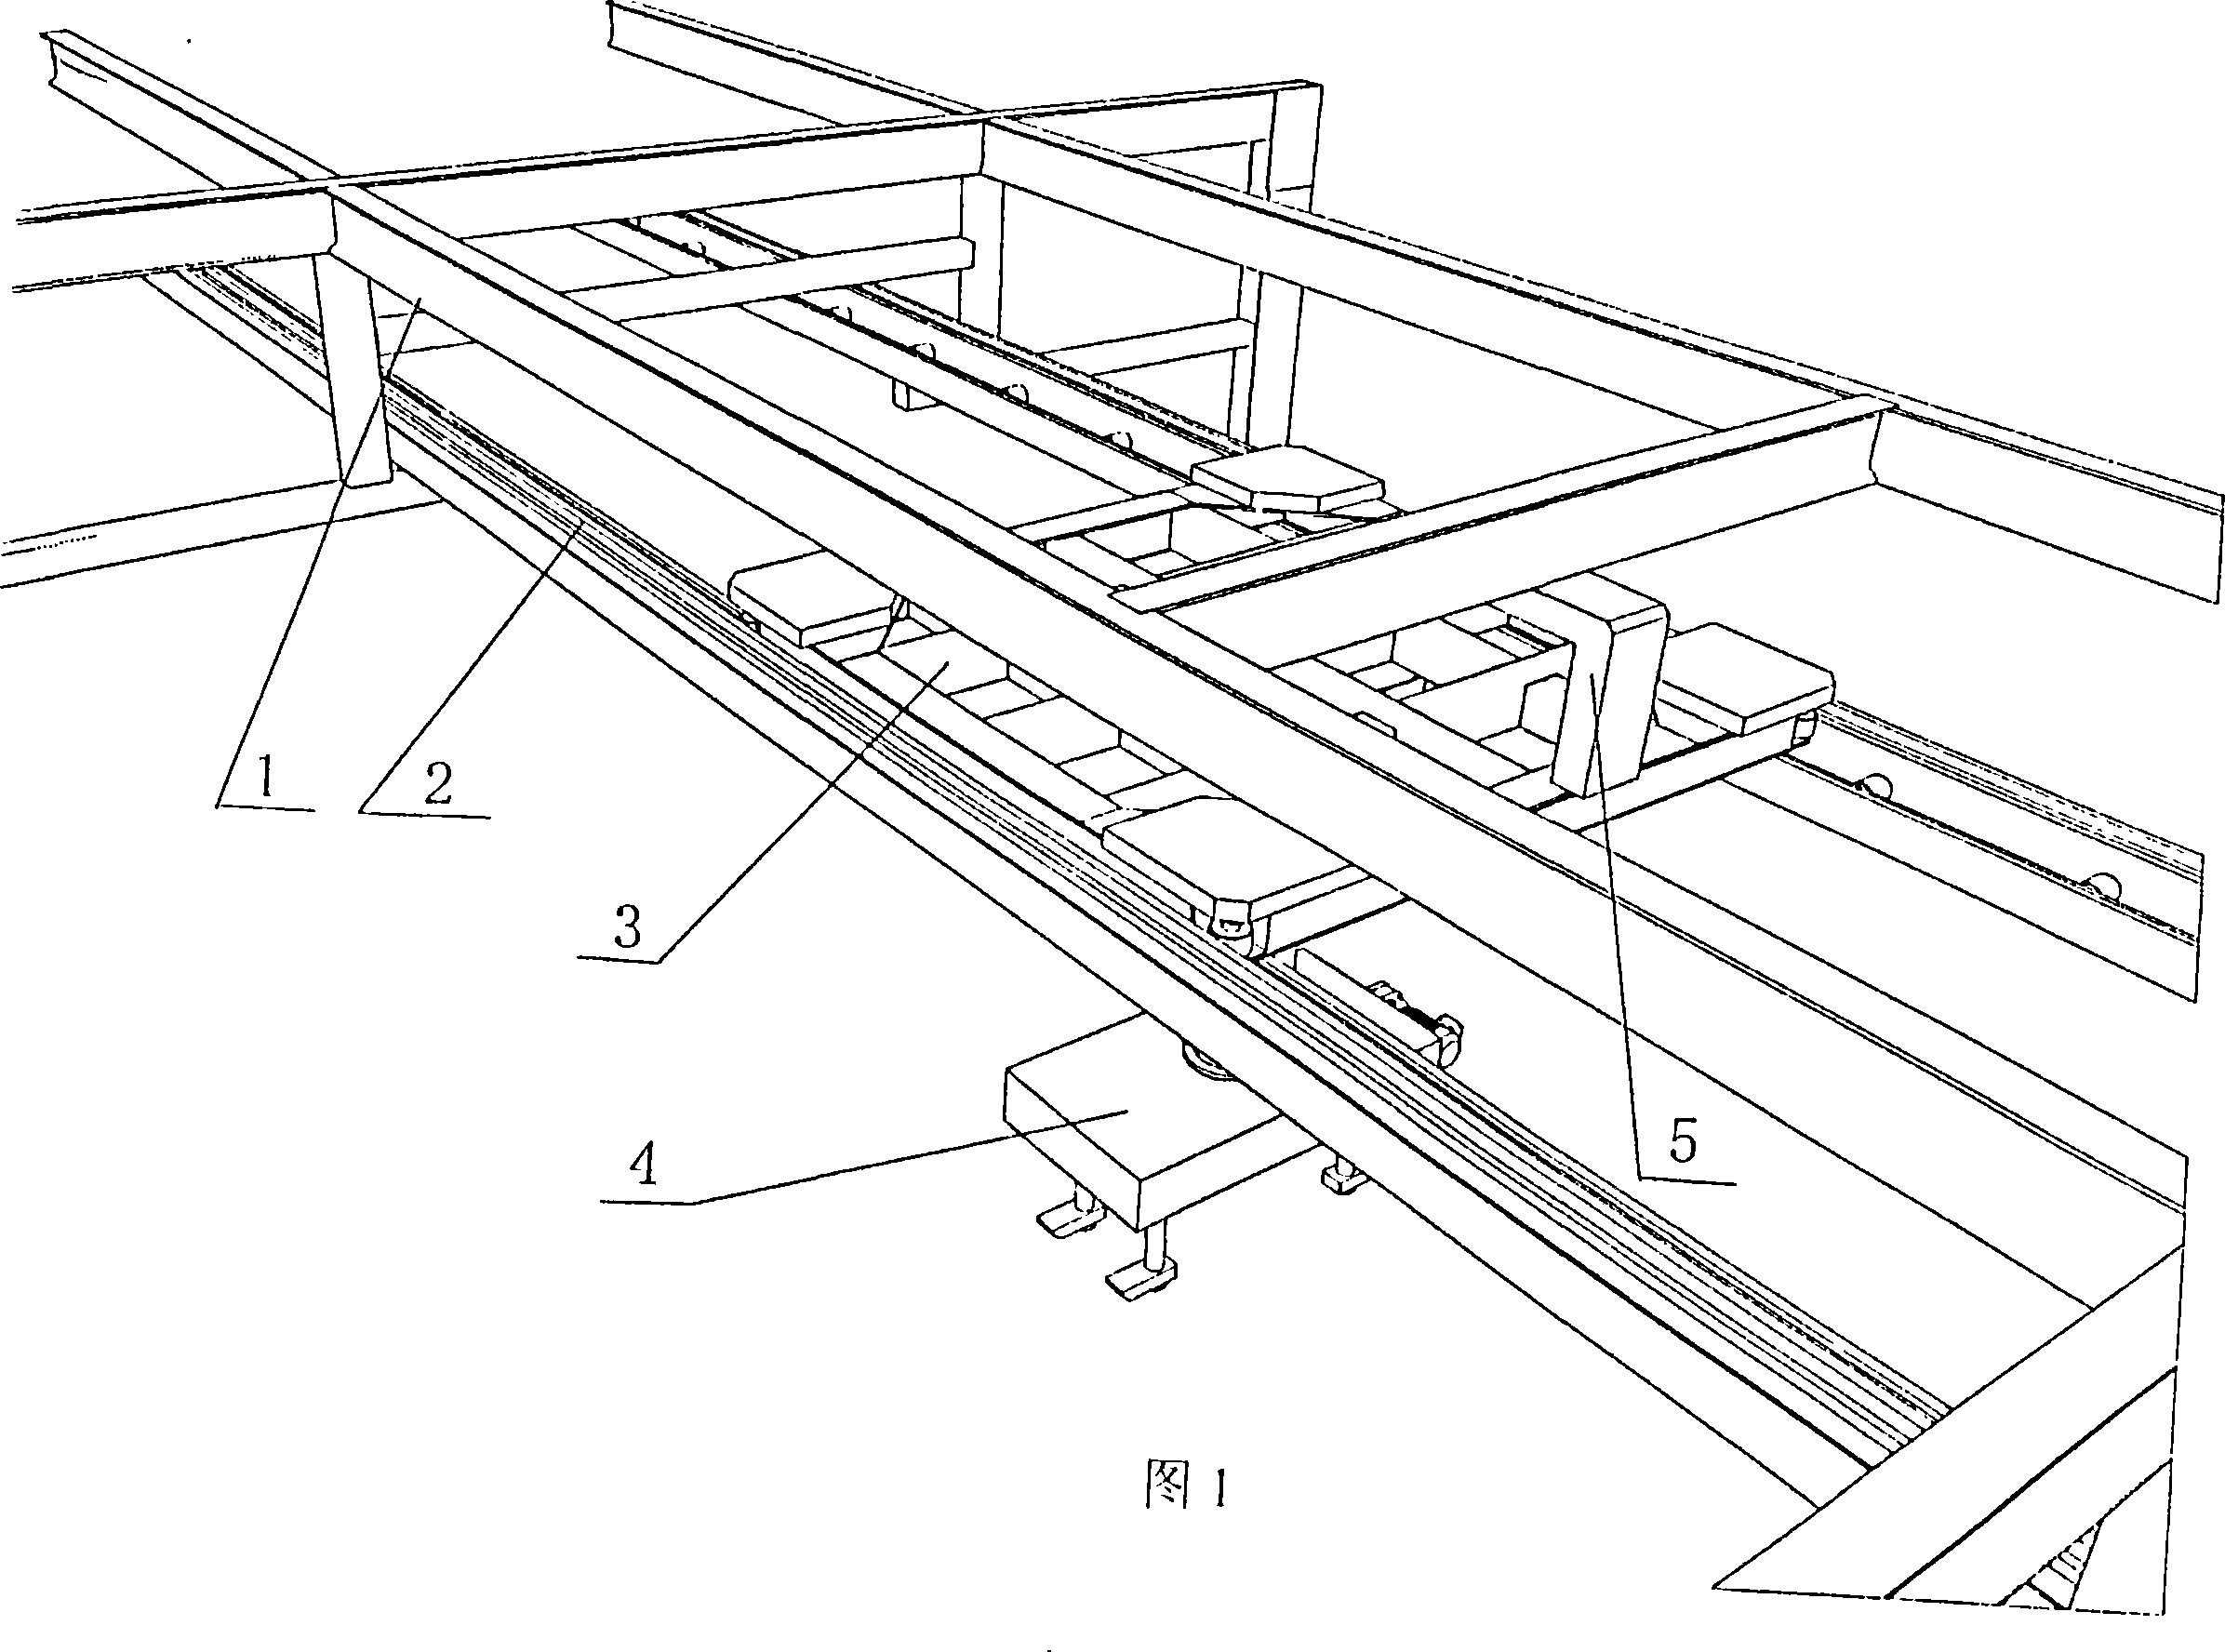 Asynchronous type suspension conveyor